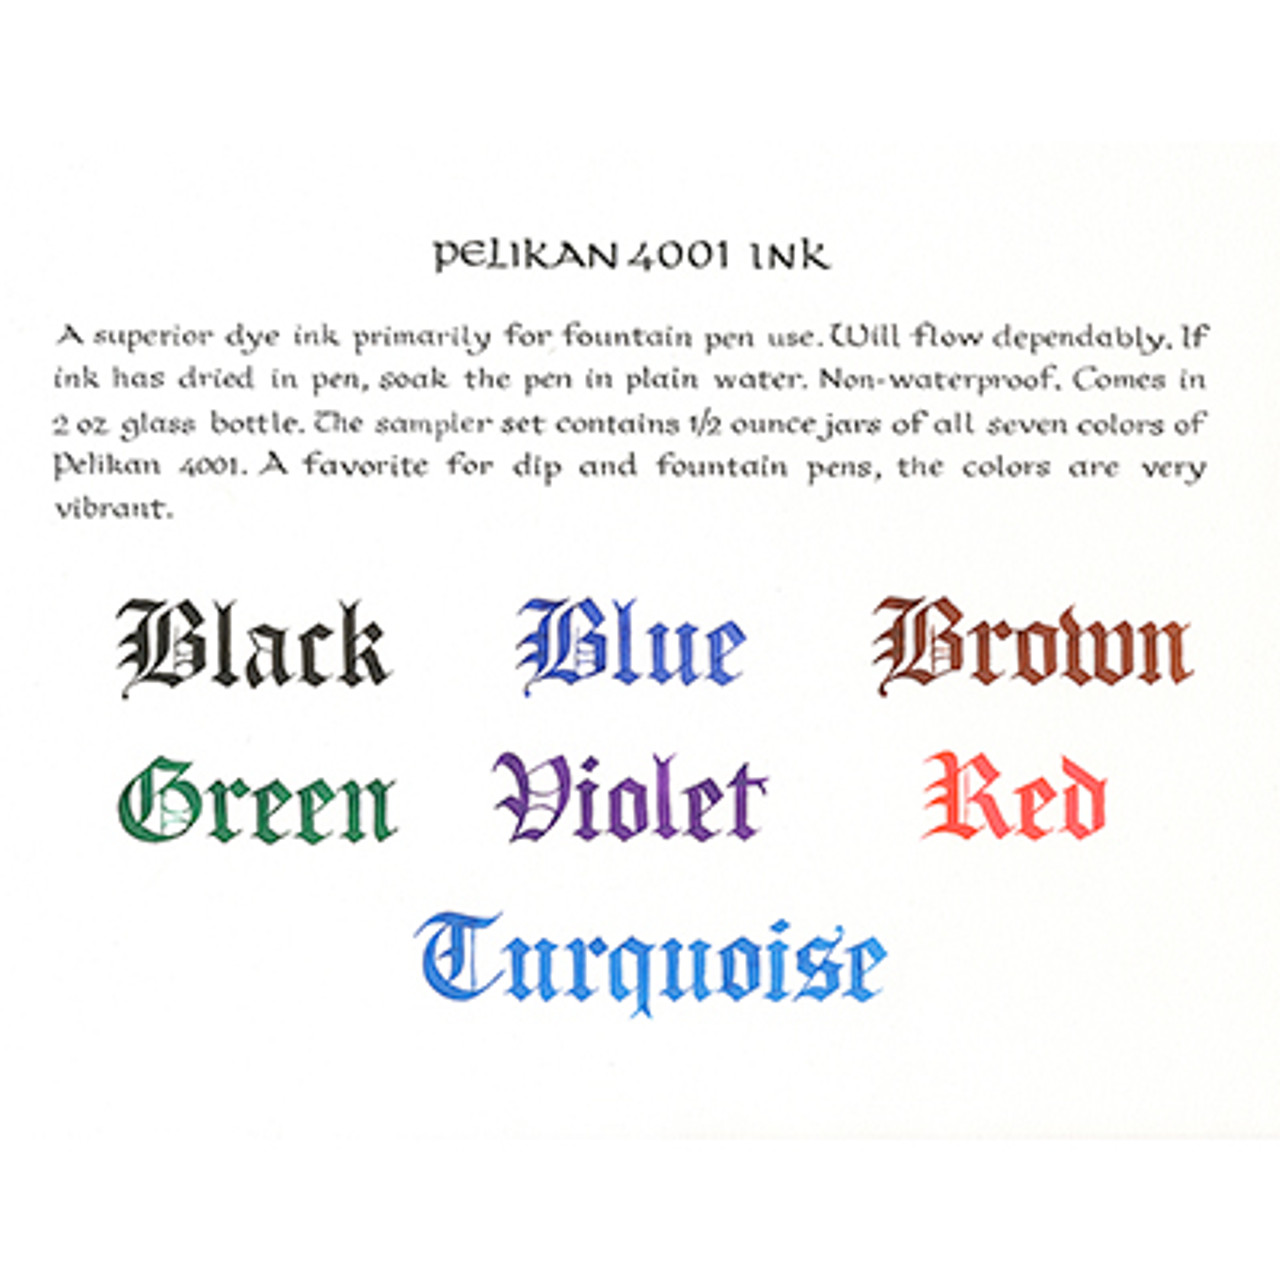 Pelikan 4001 Ink - John Neal Books